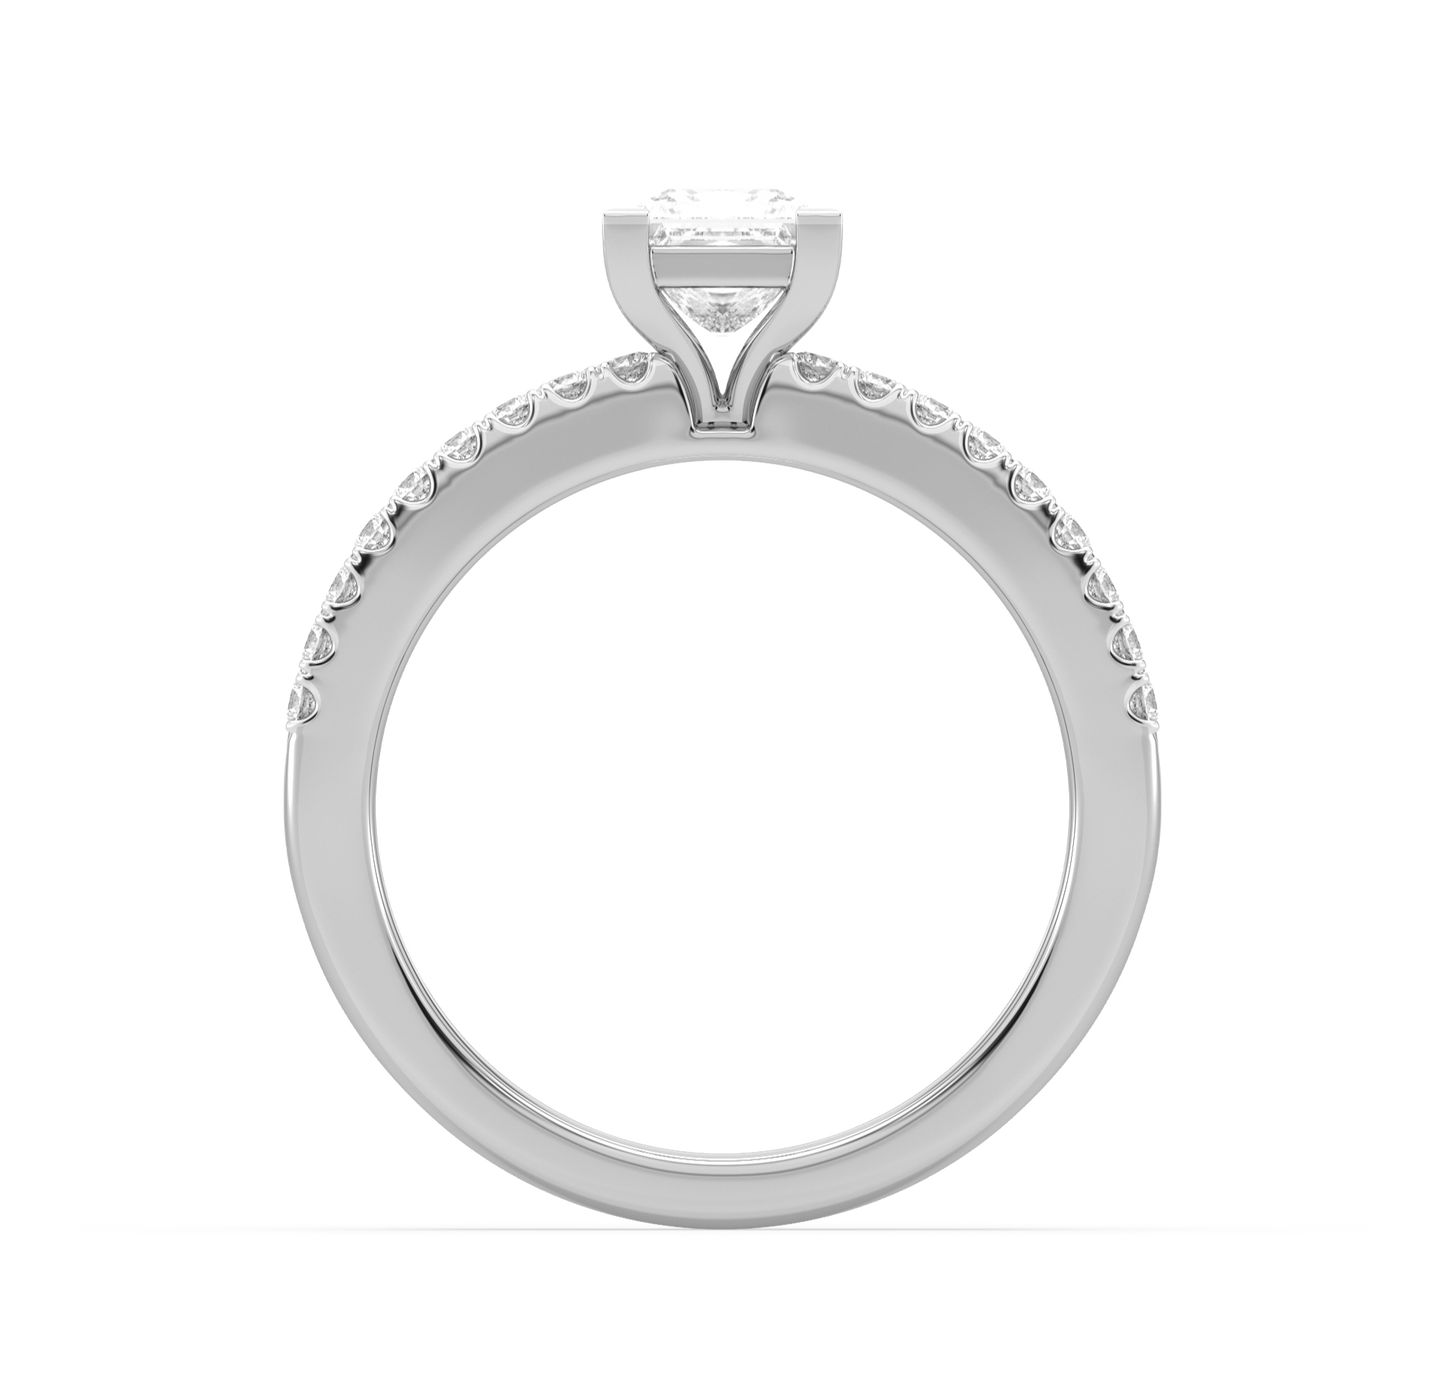 Customised ring RG21005-PH21003